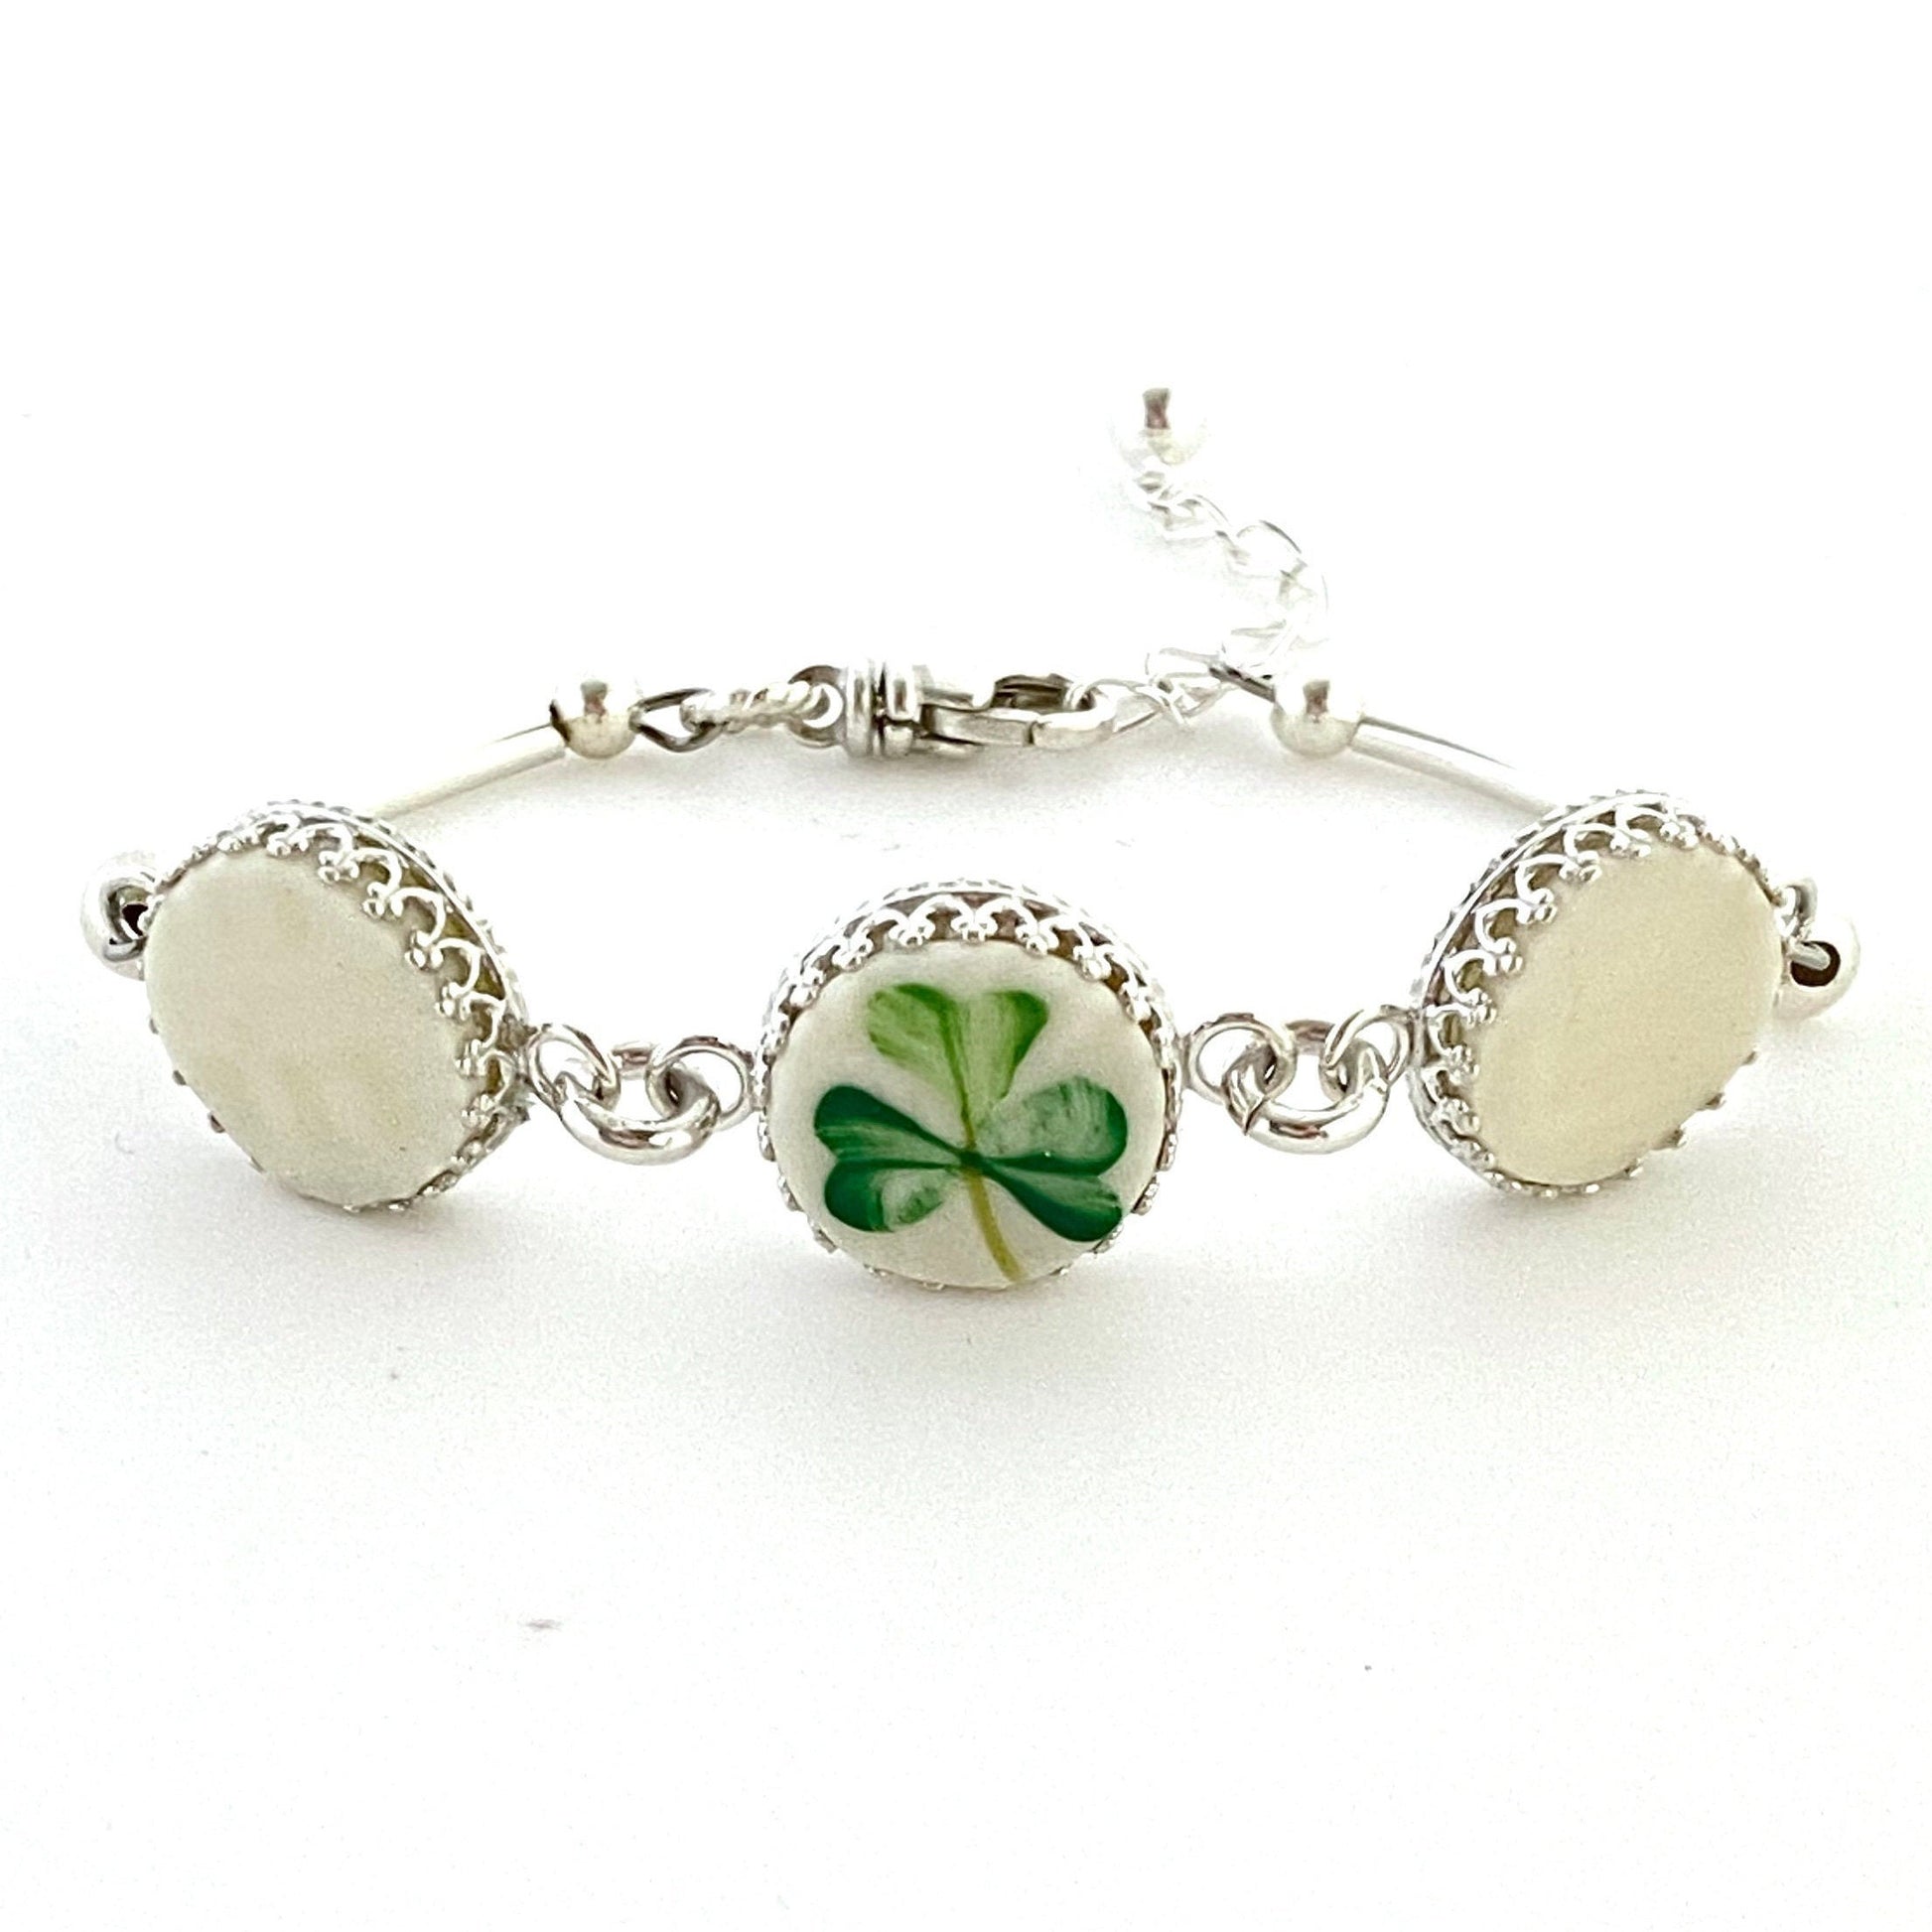 Celtic Bracelet, Irish Belleek Broken China Jewelry, 20th Anniversary Gift for Wife, Irish China Bracelet, Unique Celtic Gifts for Women